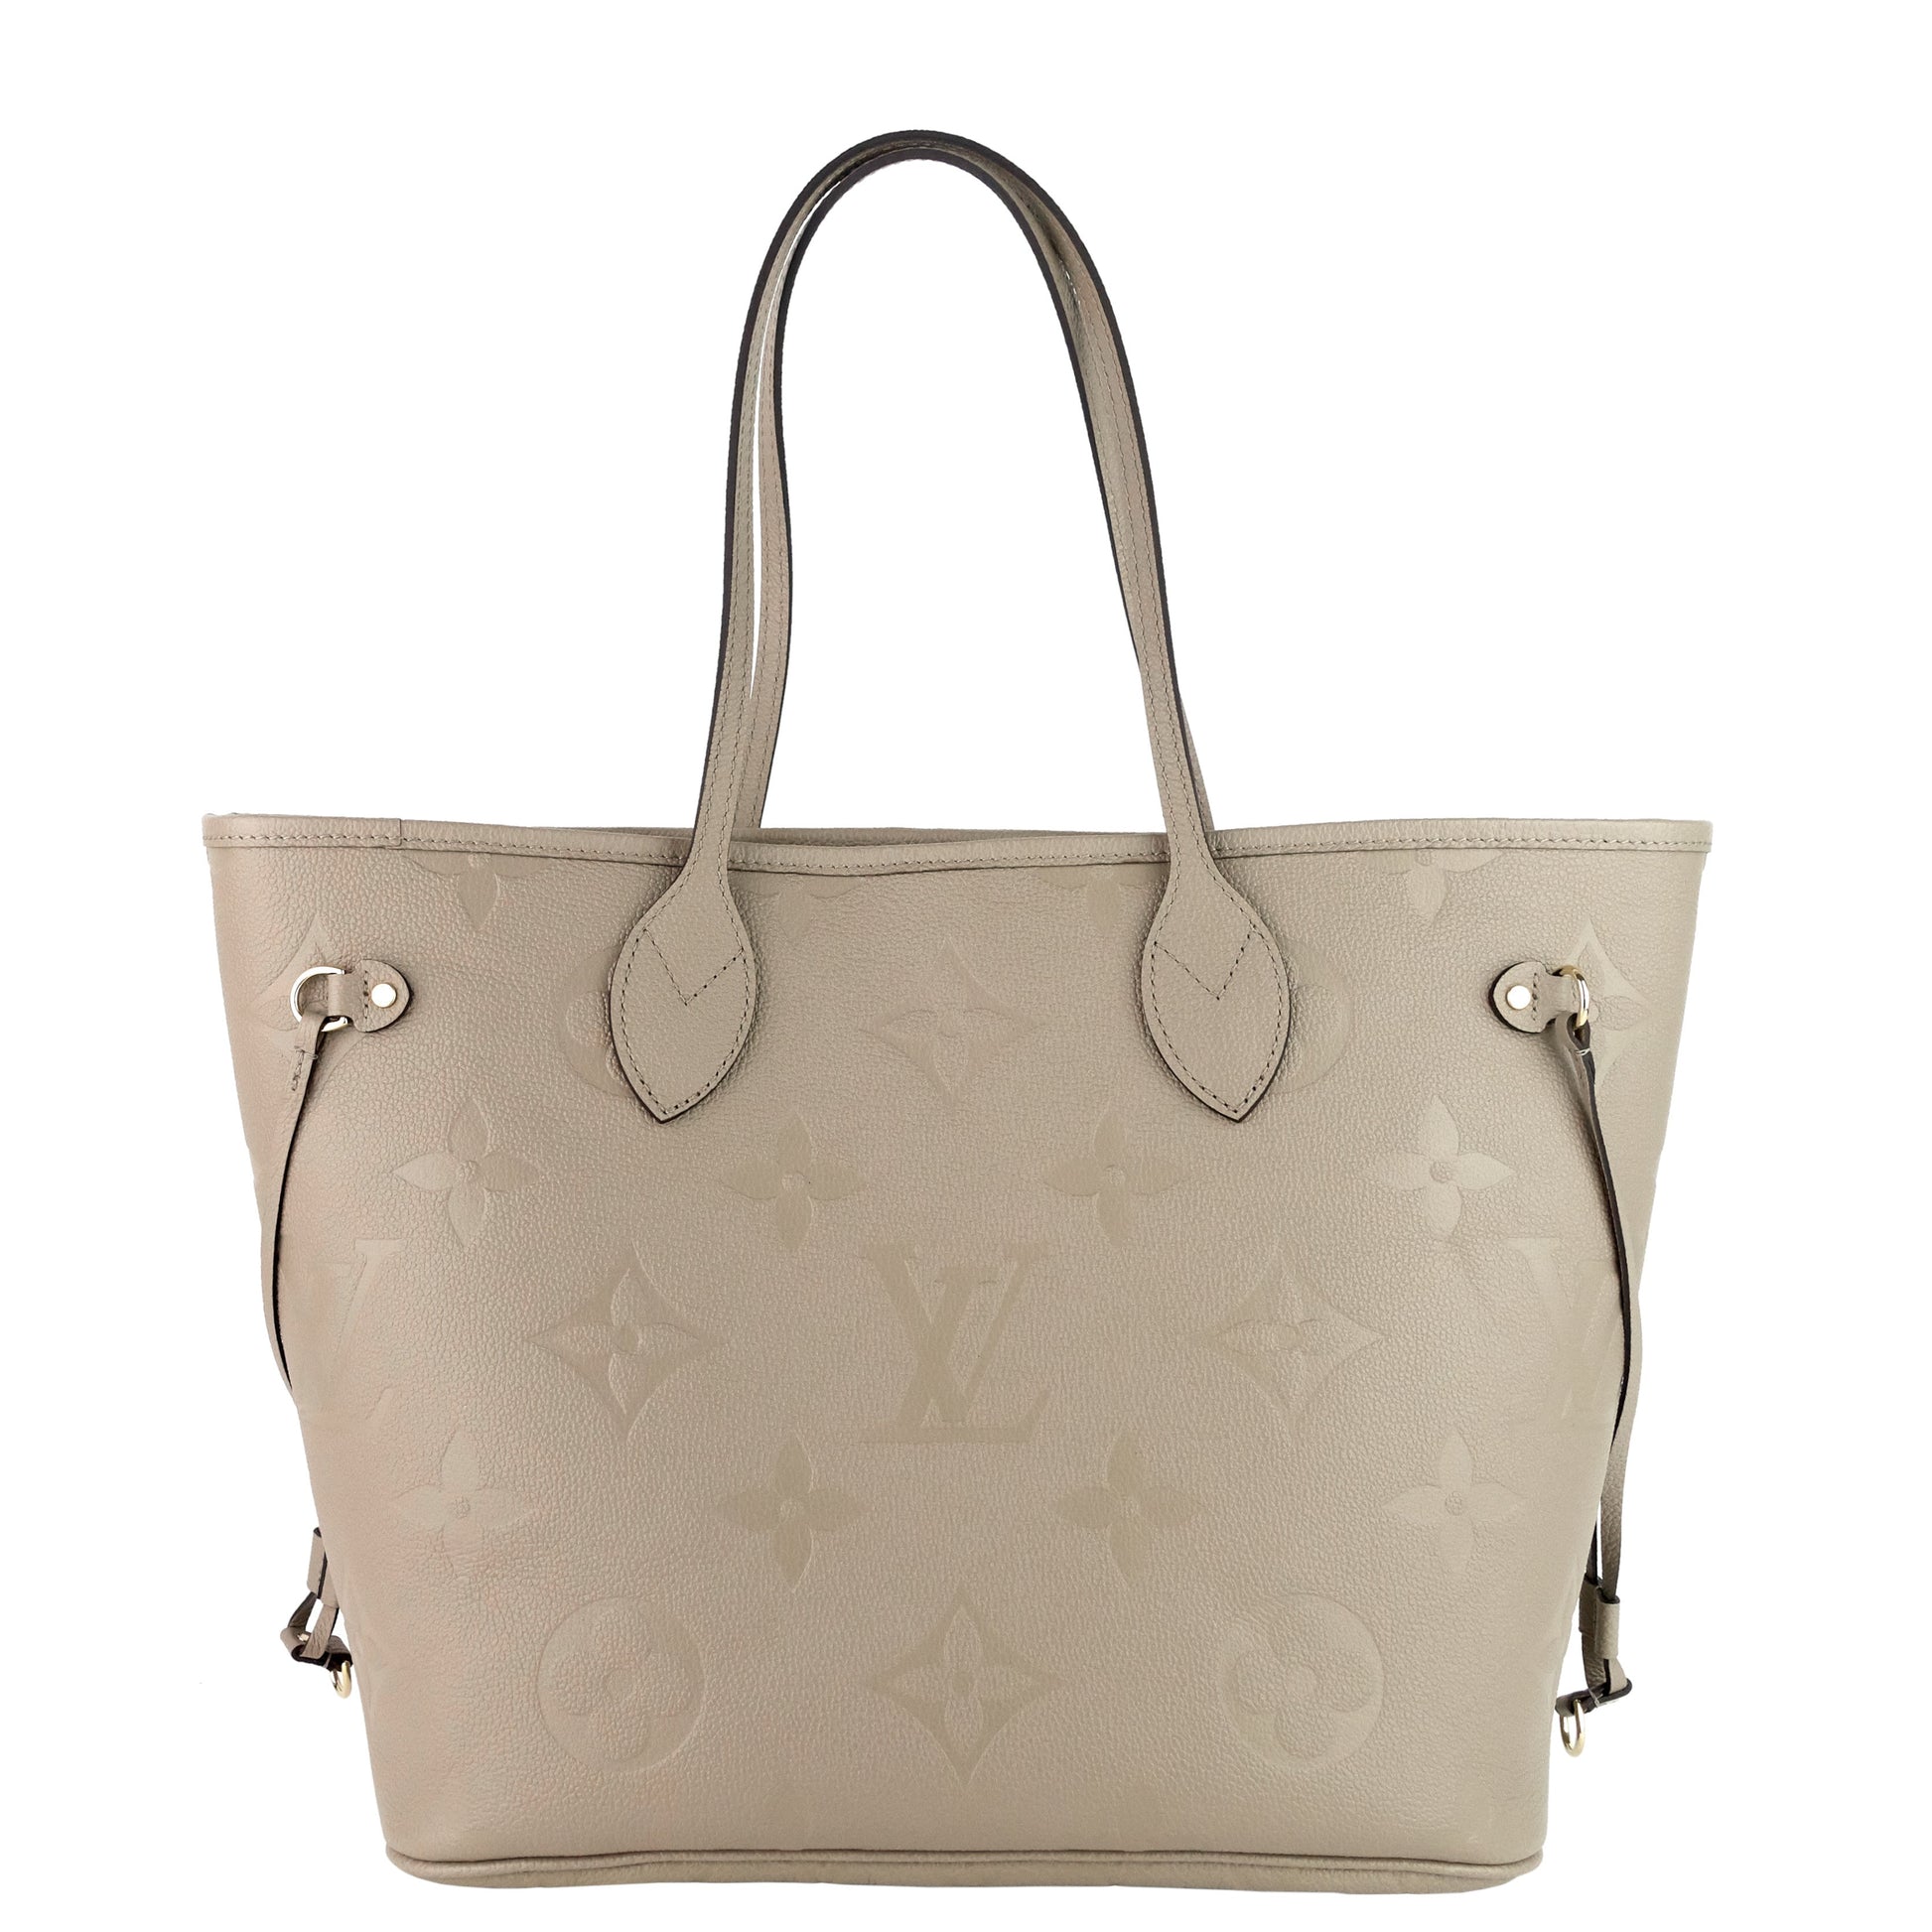 CarryAll MM Monogram Empreinte Leather - Handbags